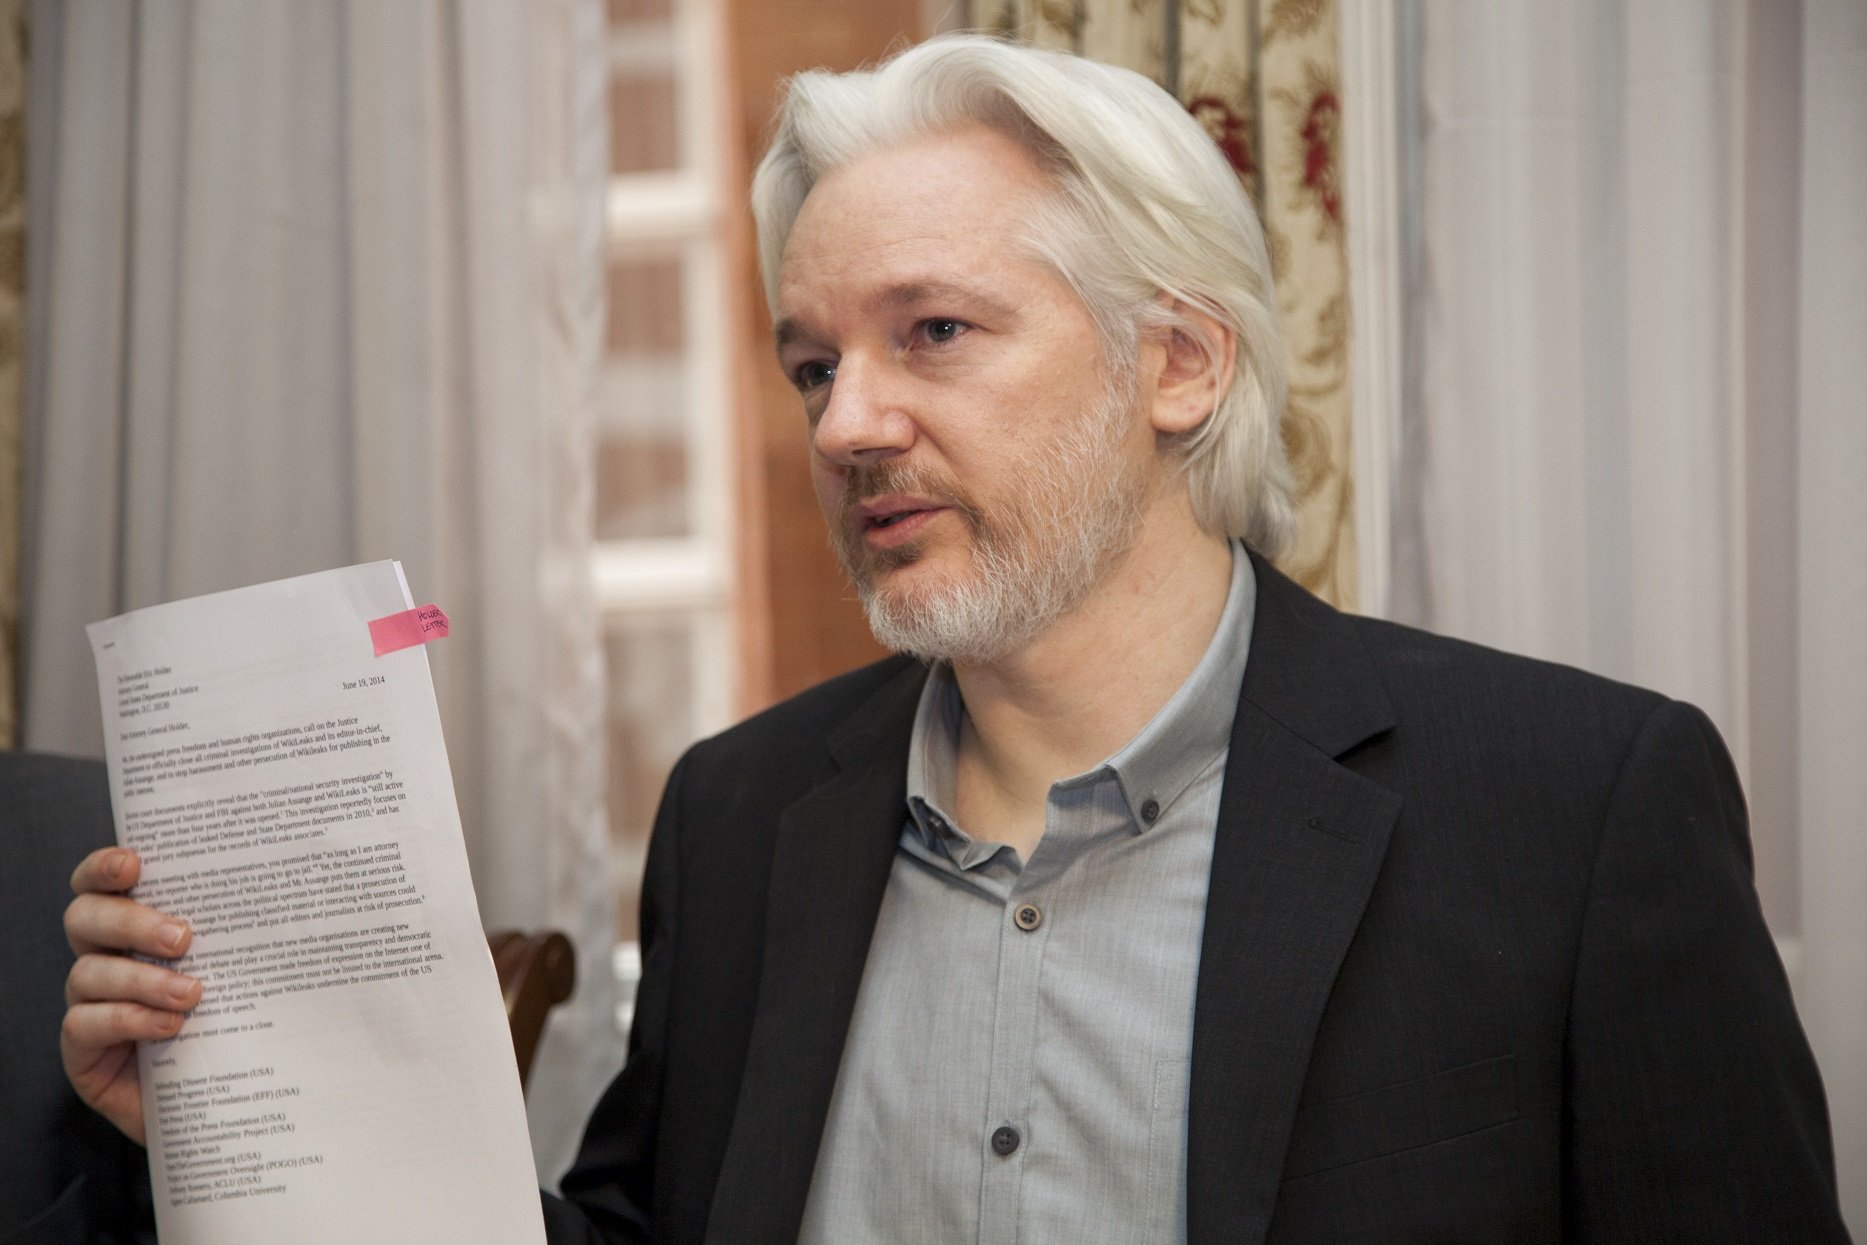 L'escriptor Pérez-Reverte insulta Assange per donar suport al referèndum